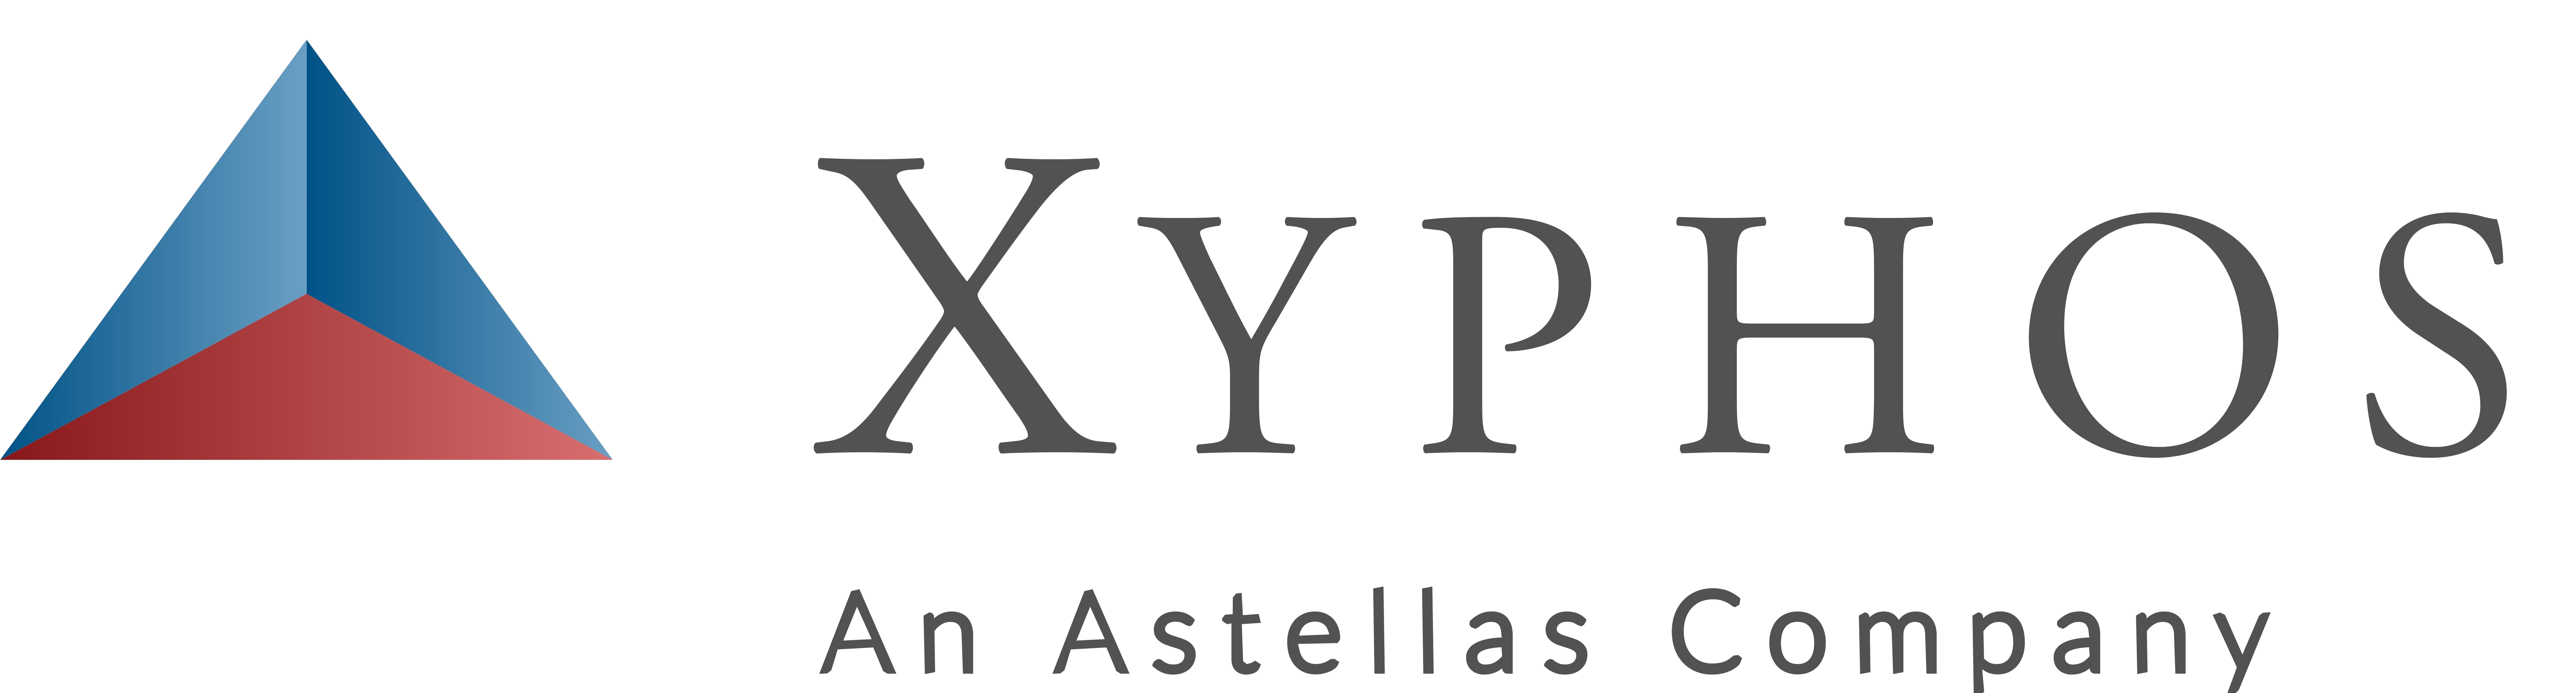 Xyphos